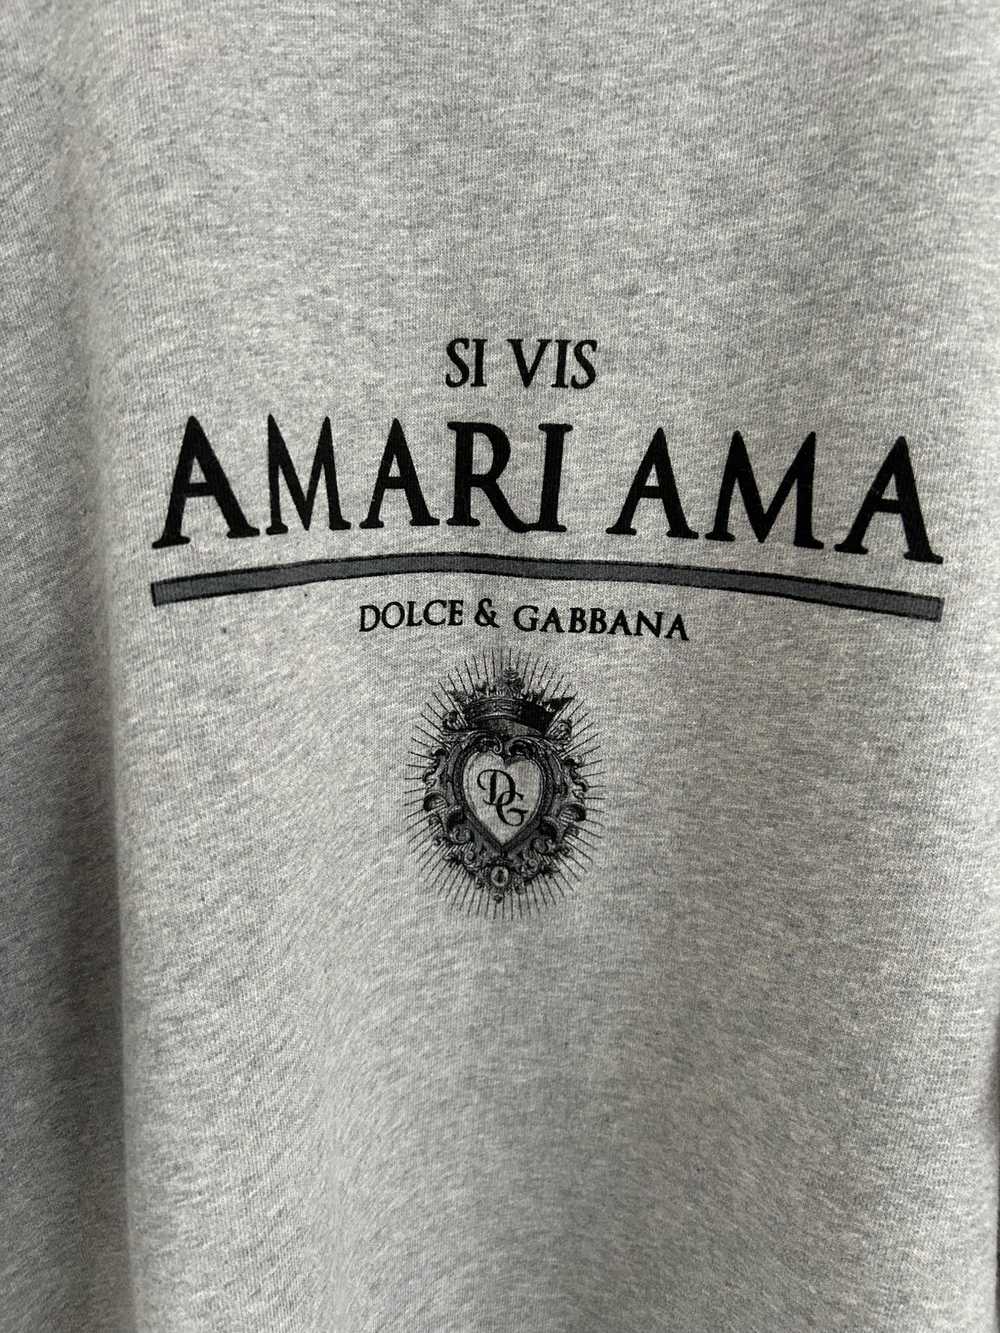 Dolce & Gabbana Amari Ama Cotton Jersey Sweatshirt - image 6